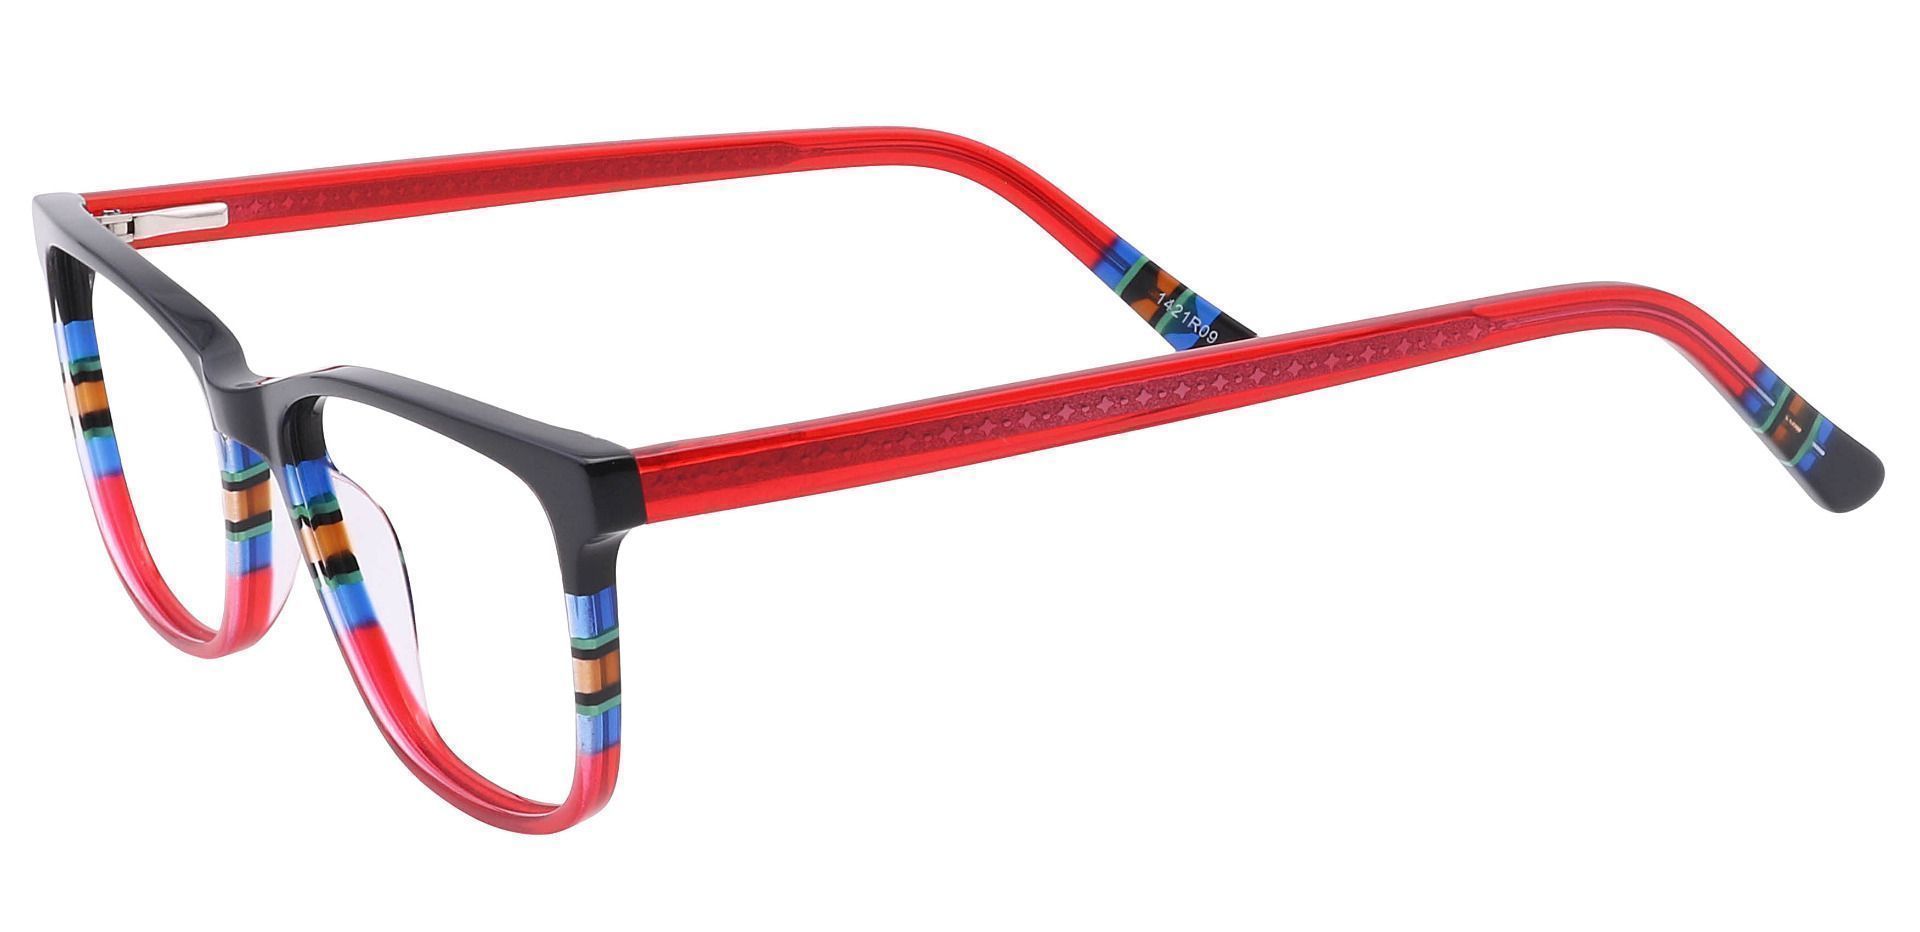 Taffie Oval Eyeglasses Frame - Red